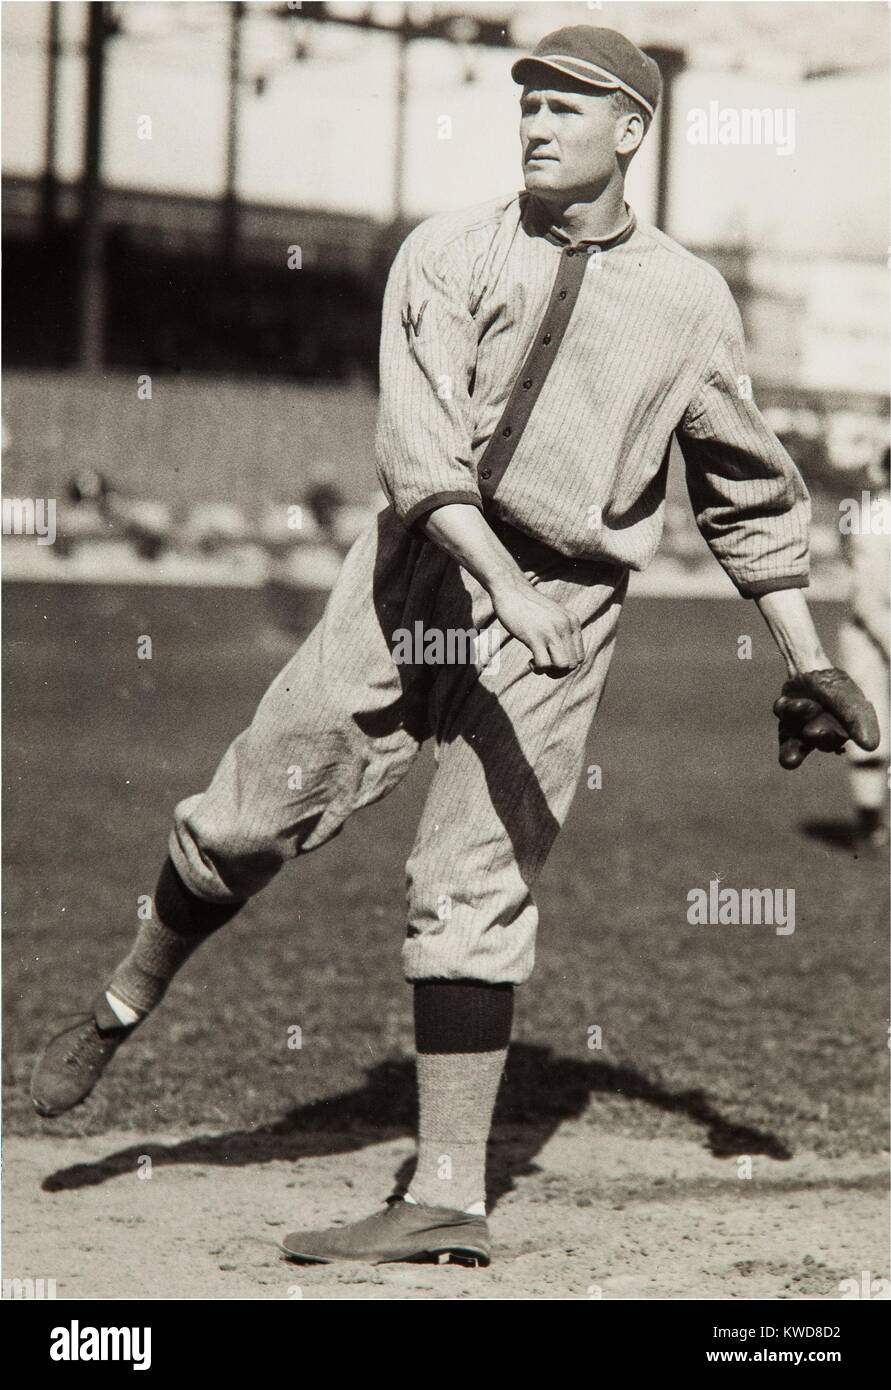 Washington Senators pitcher Walter Johnson ca. 1910-1919. Photo by Charles Conlon. (BSLOC 2015 17 34) Stock Photo